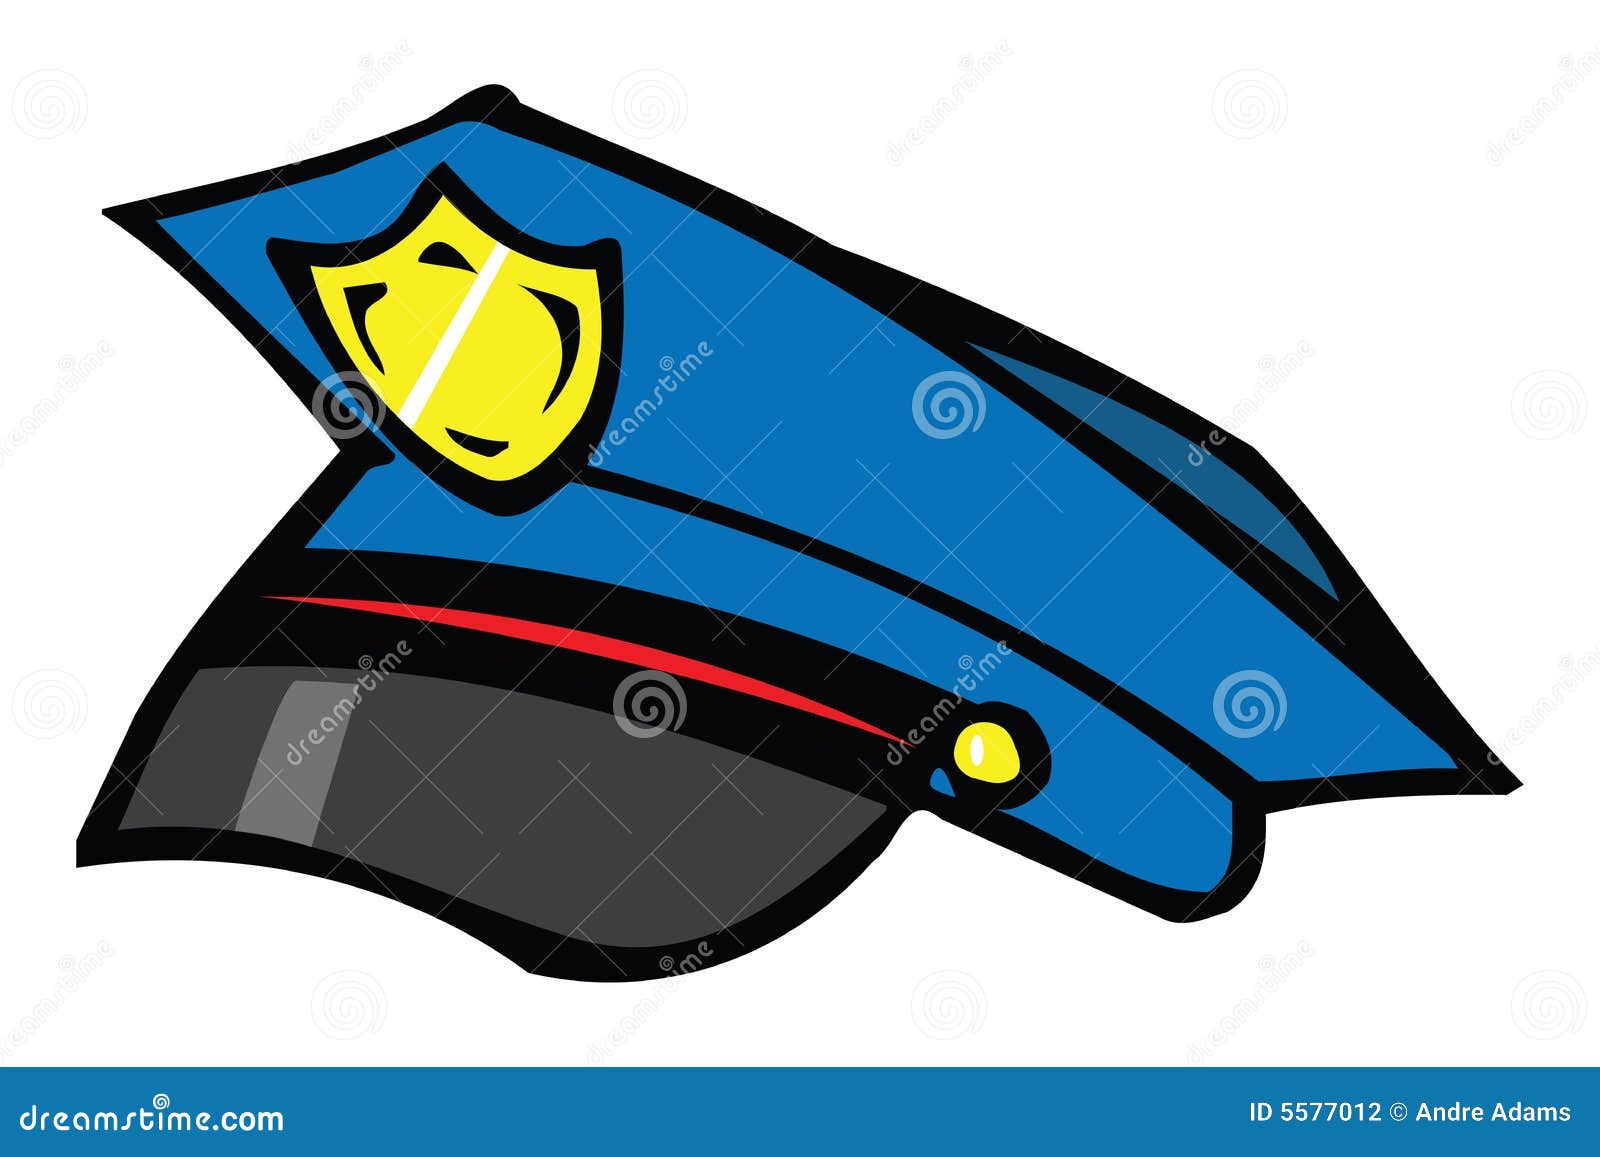 police hat clip art - photo #11